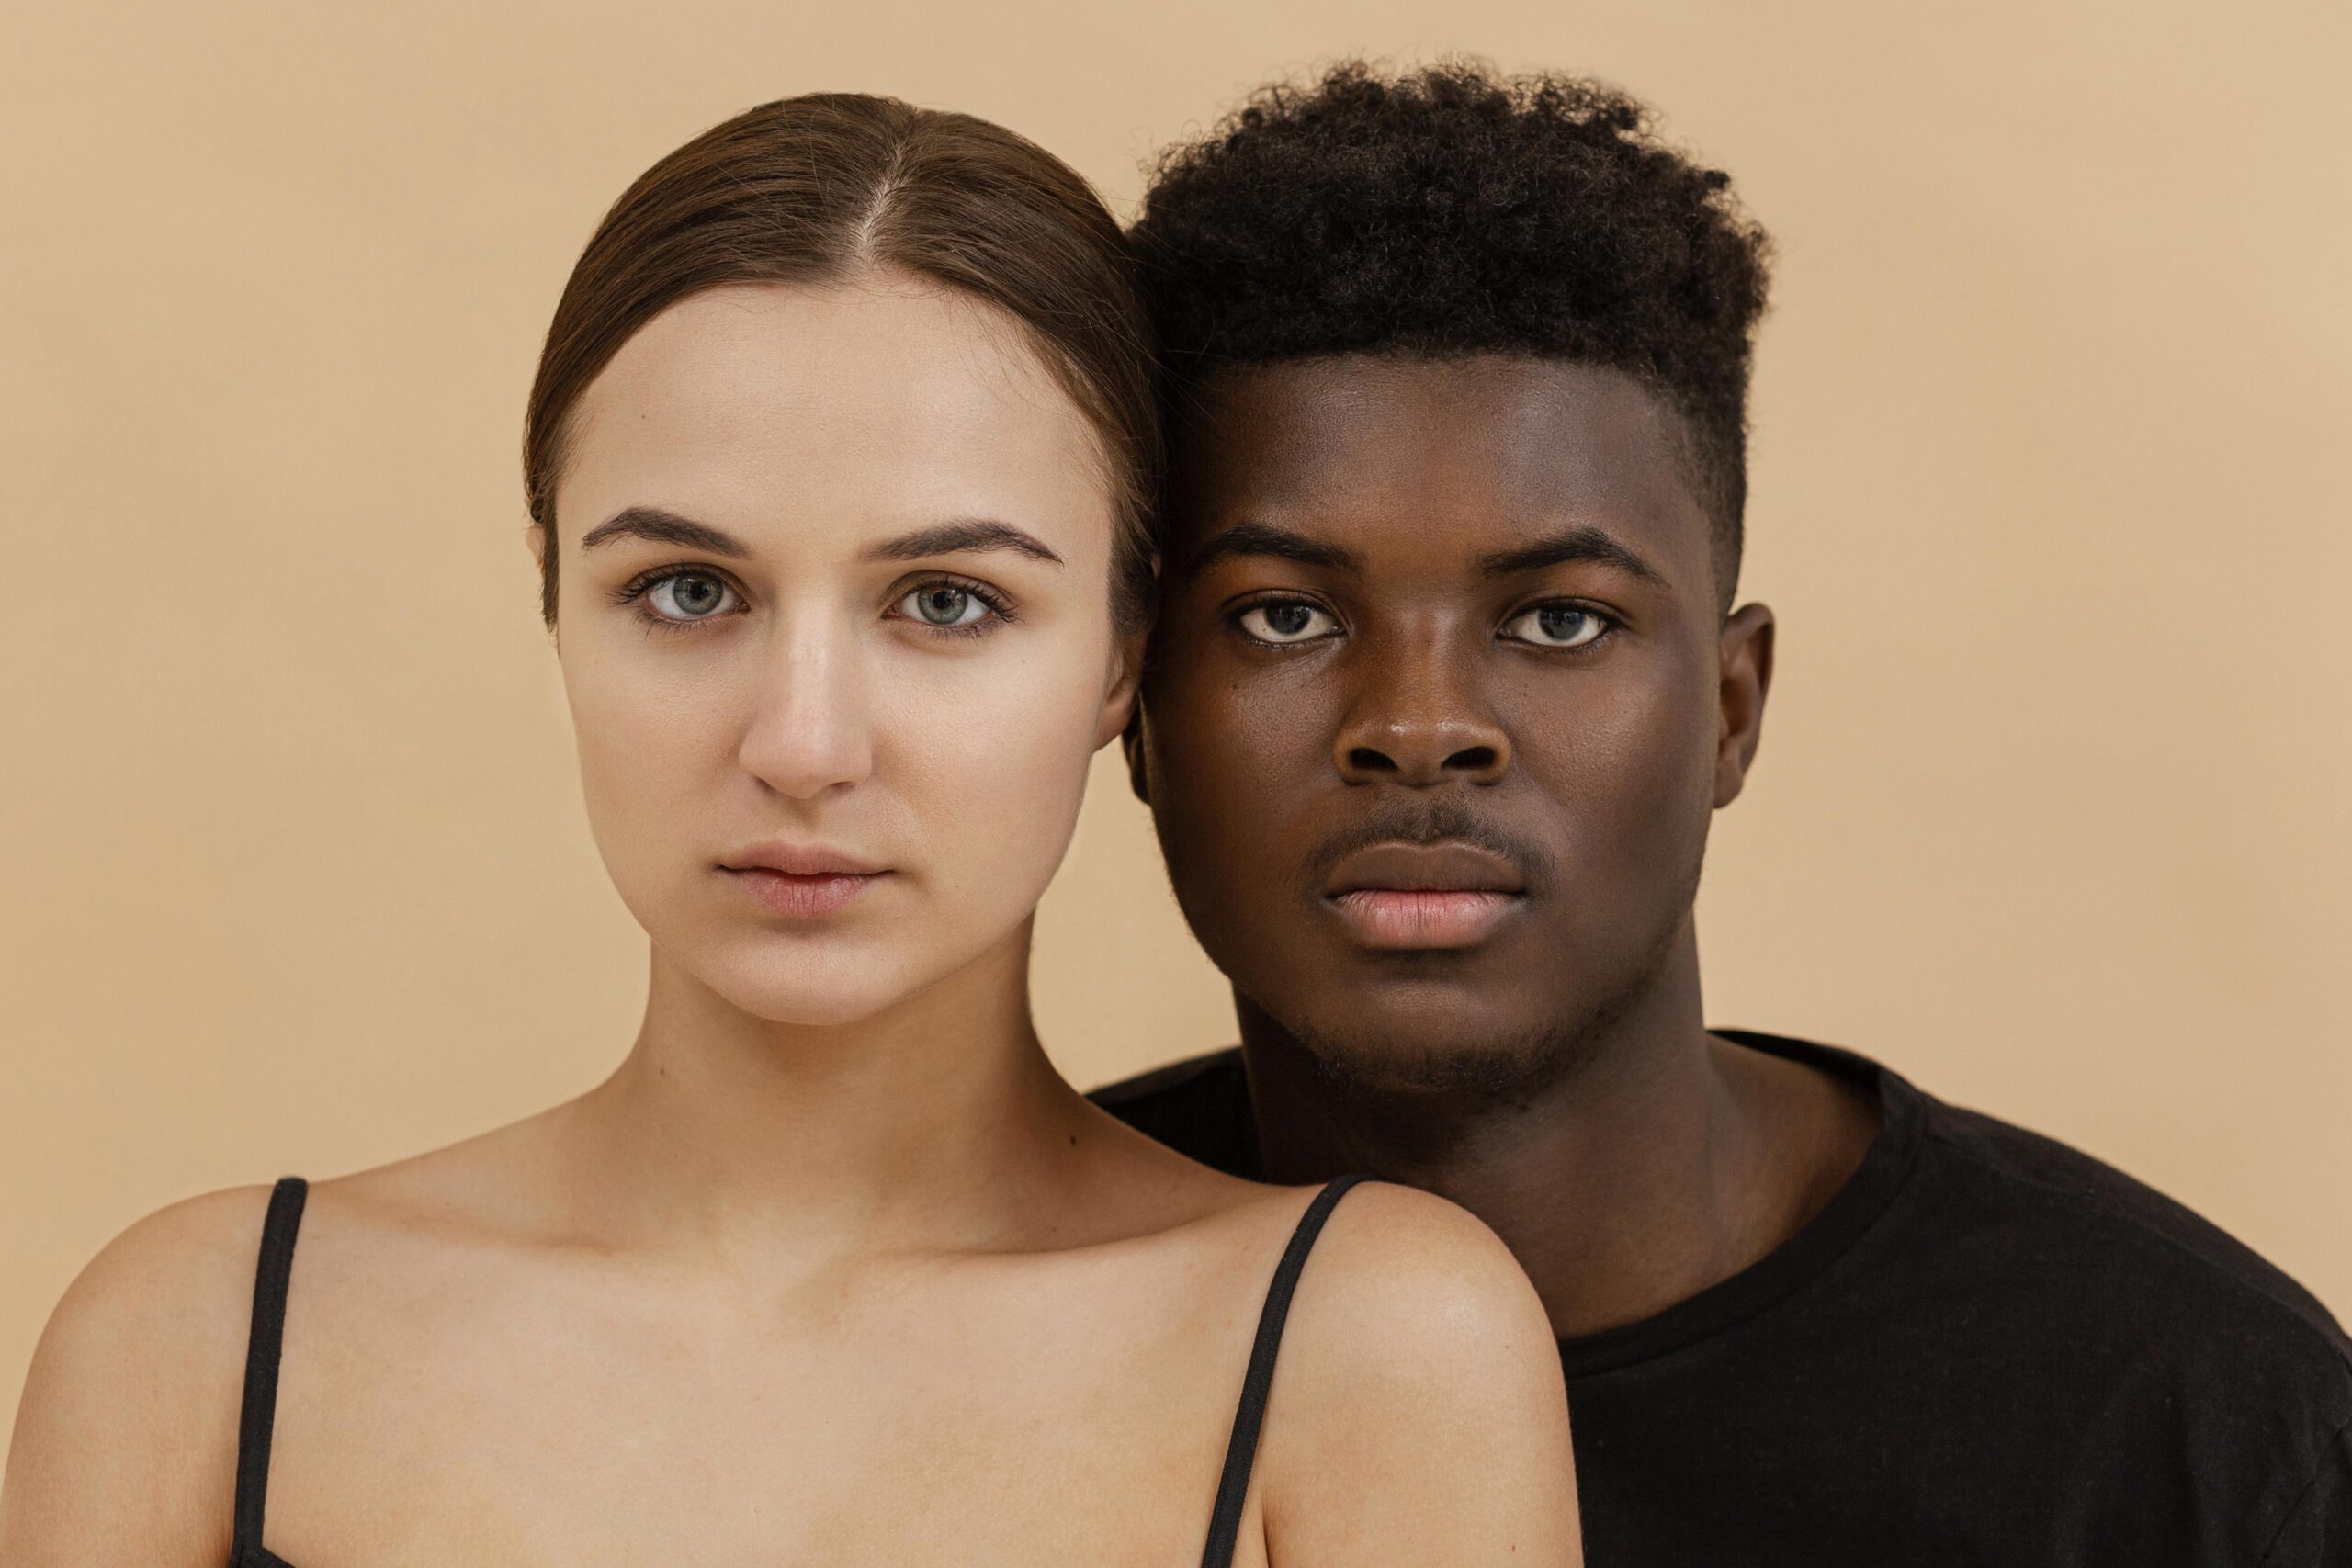 interracial-couple-portrait-close-up-scaled-1.jpg